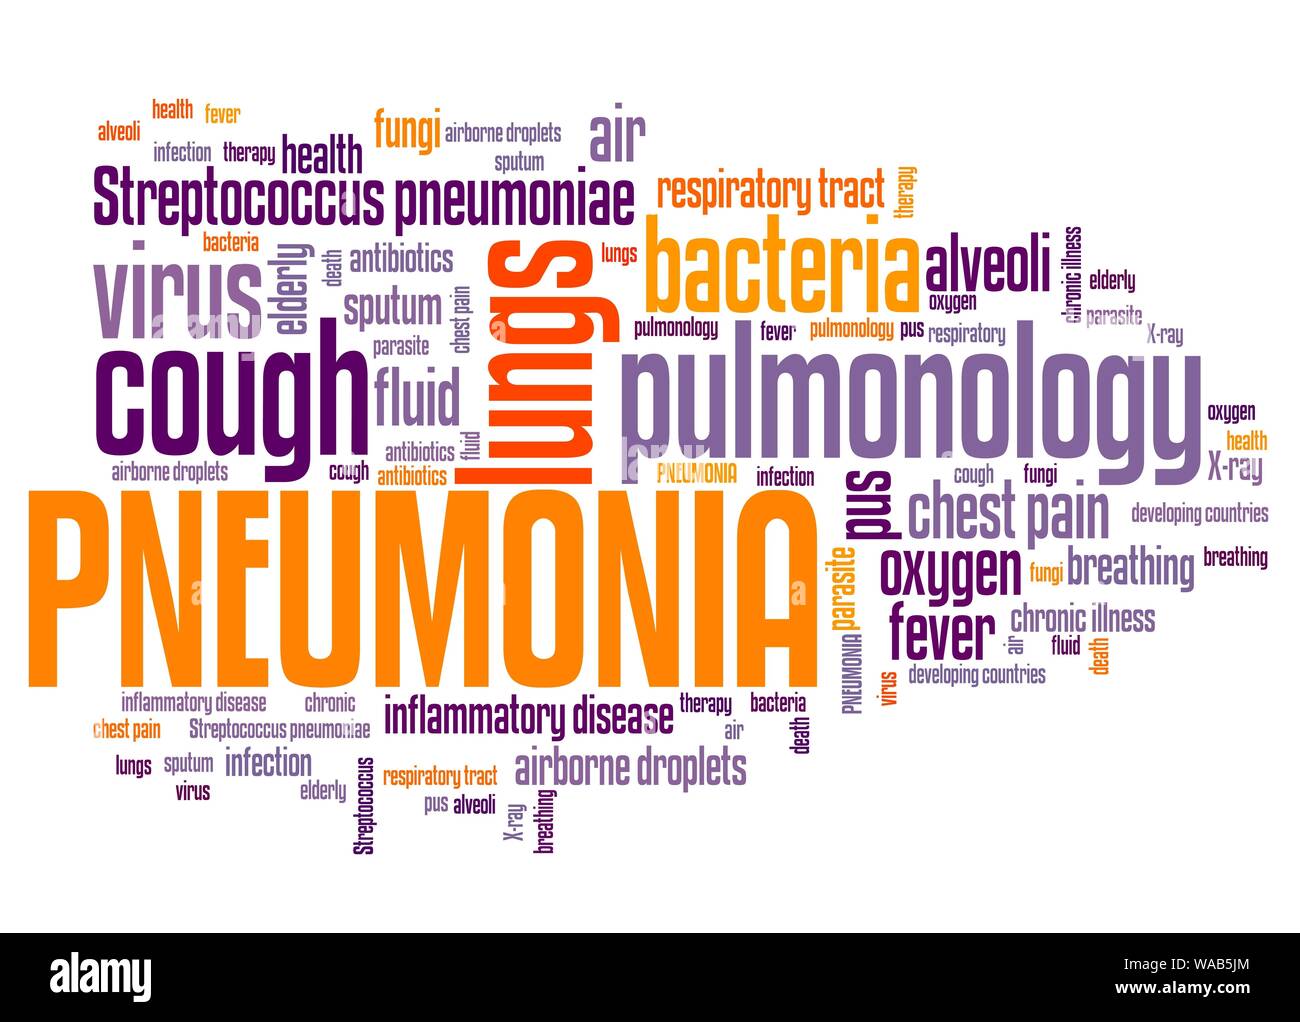 Pneumonia - respiratory tract sickness. Health care word cloud. Stock Photo